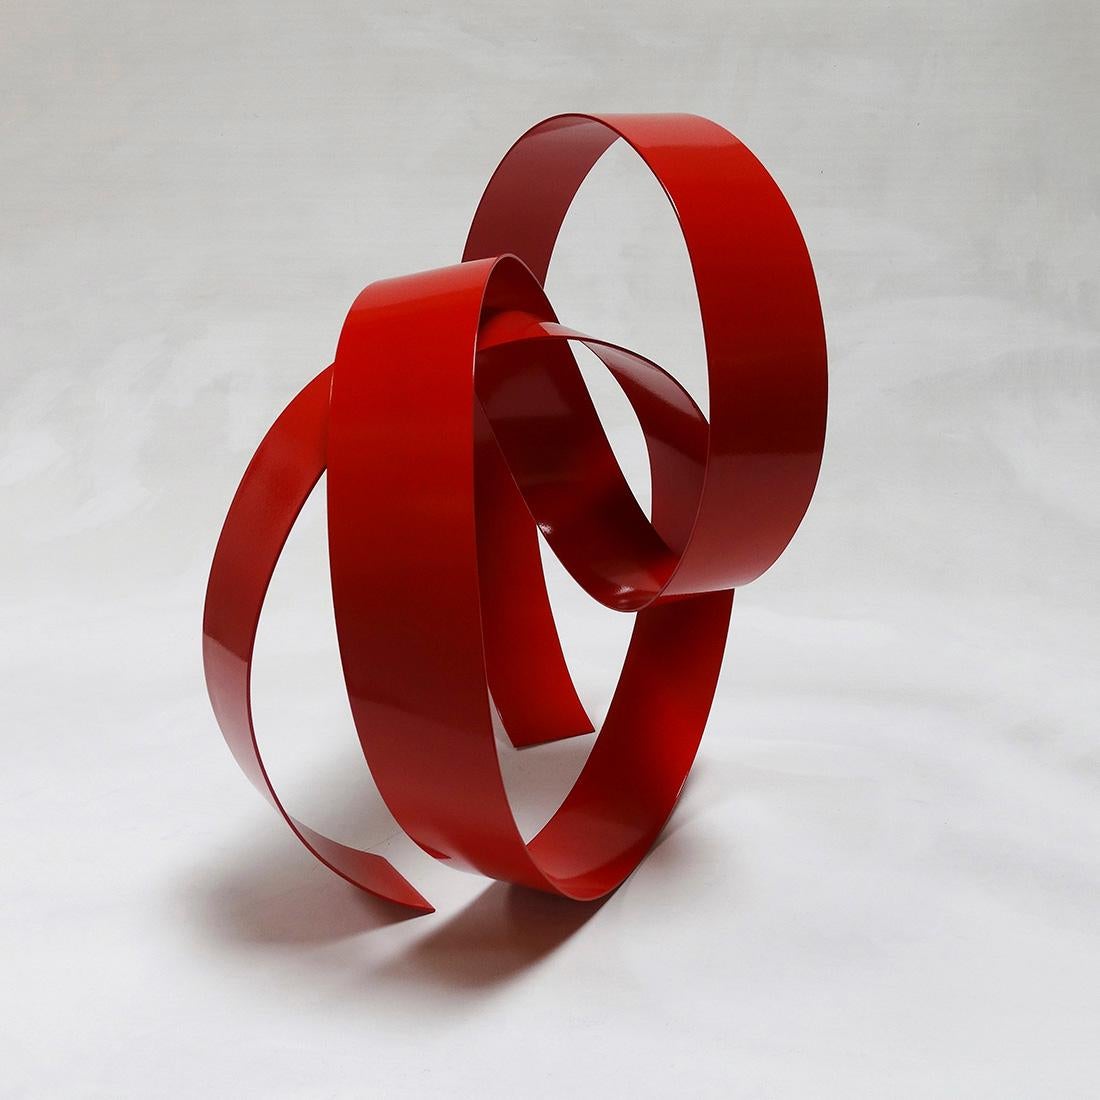 Corbant Red 11 - Abstract, Outdoor Sculpture, Contemporary, Art, Rafael Amorós 3